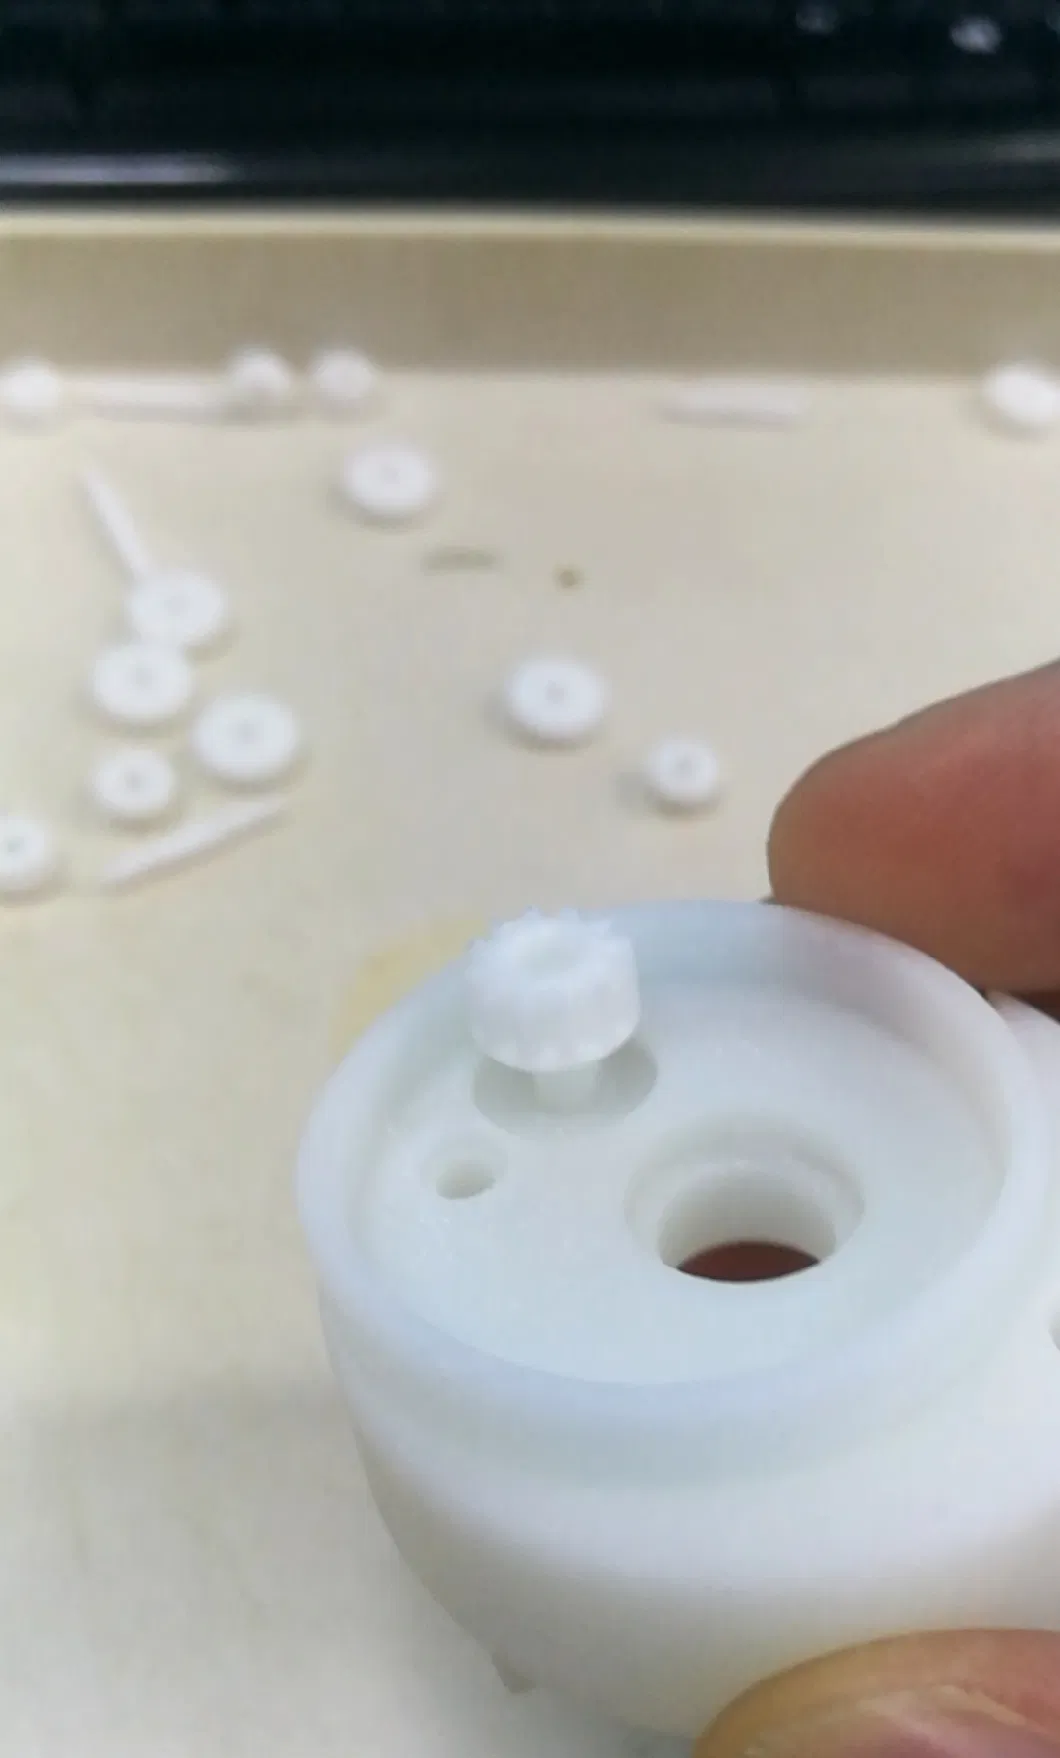 Senbao High Quality 3D Printing SLA Resin Rapid Prototype Parts for Model